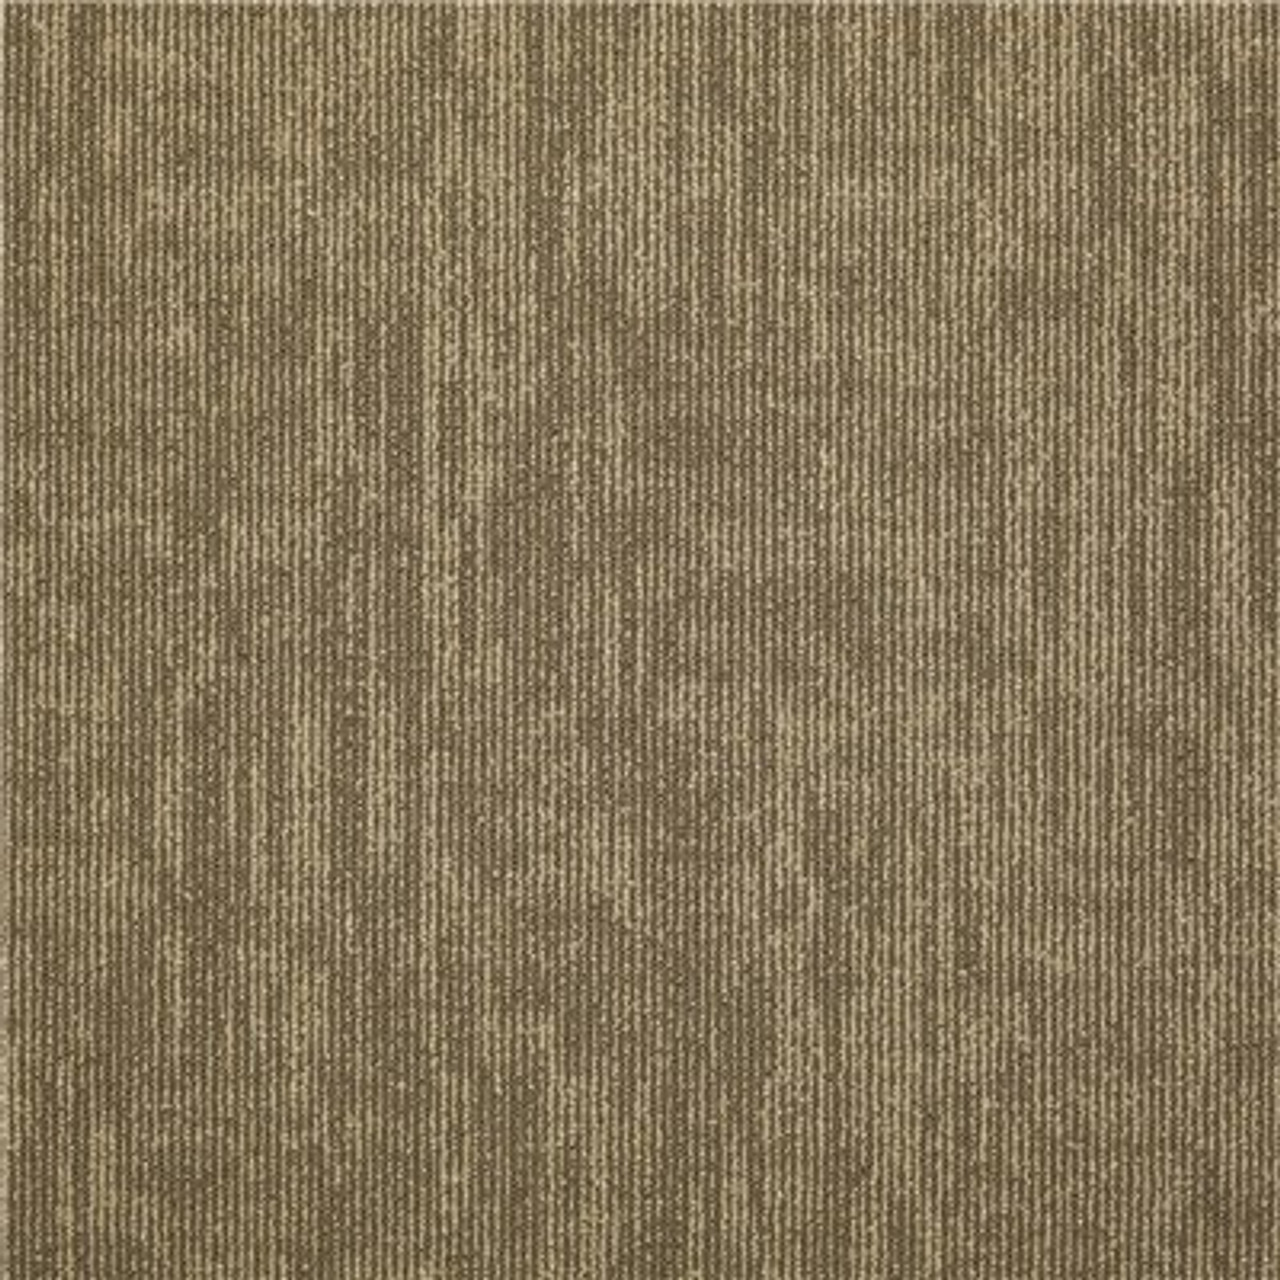 Shaw Graphix Khaki Loop Commercial 24 In. X 24 In. Glue Down Carpet Tile (12-Tile/Case)